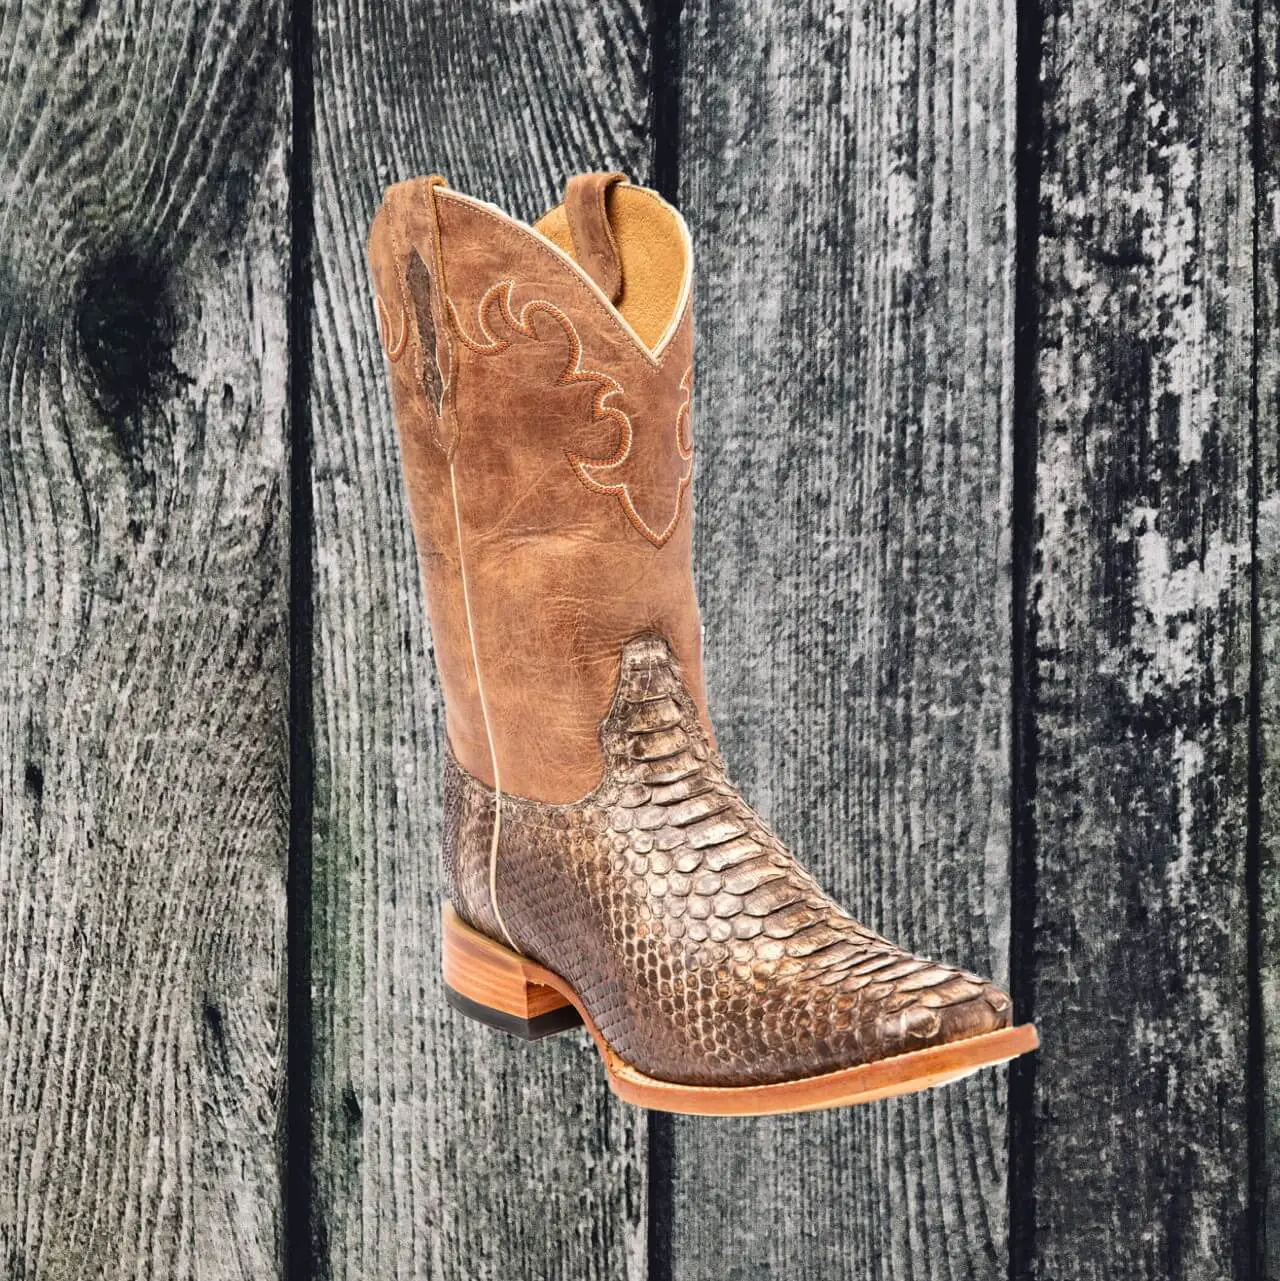 Snakeskin cowboy boot on weathered wood background.